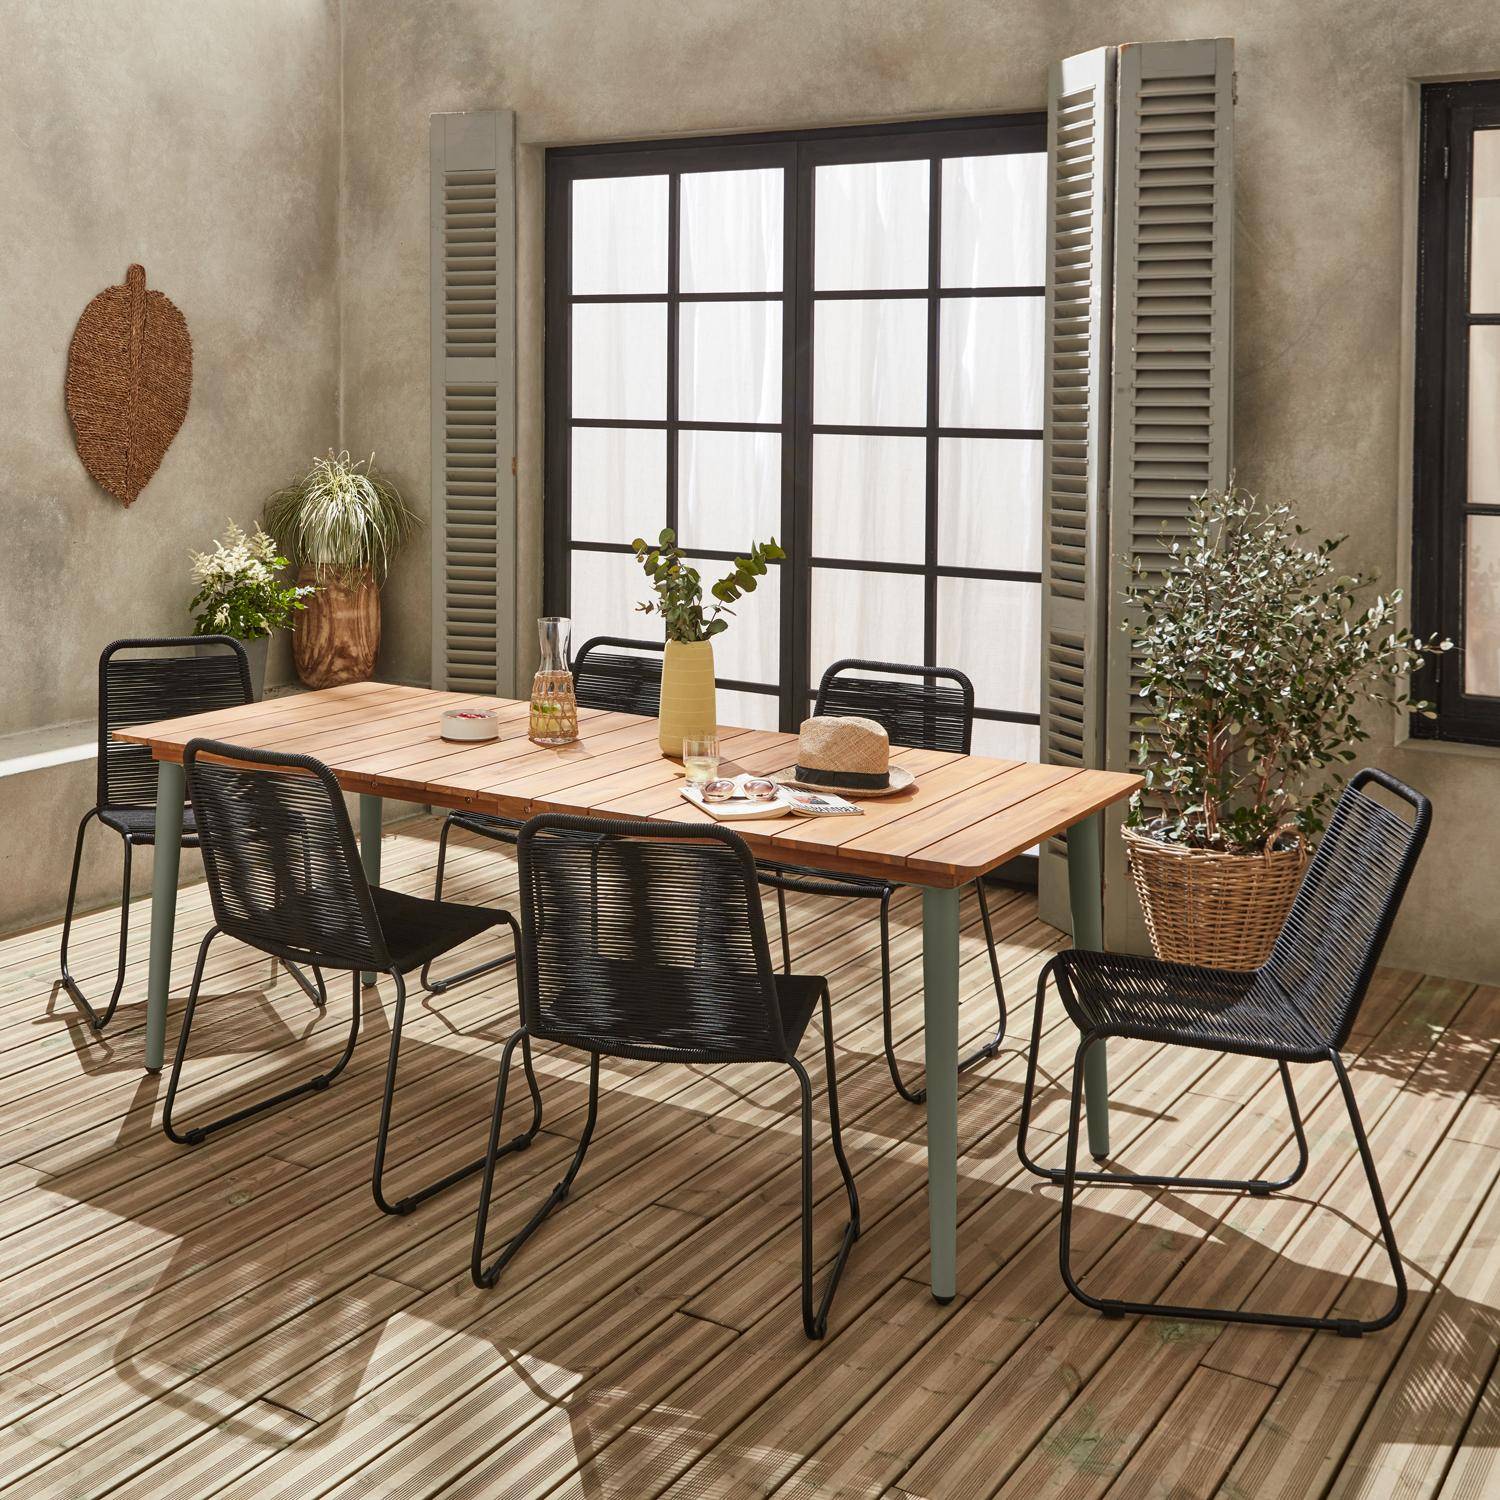 Table de jardin bois et métal savane MARINGA, 200cm + 6 chaises de jardin en corde noir BRASILIA Photo2